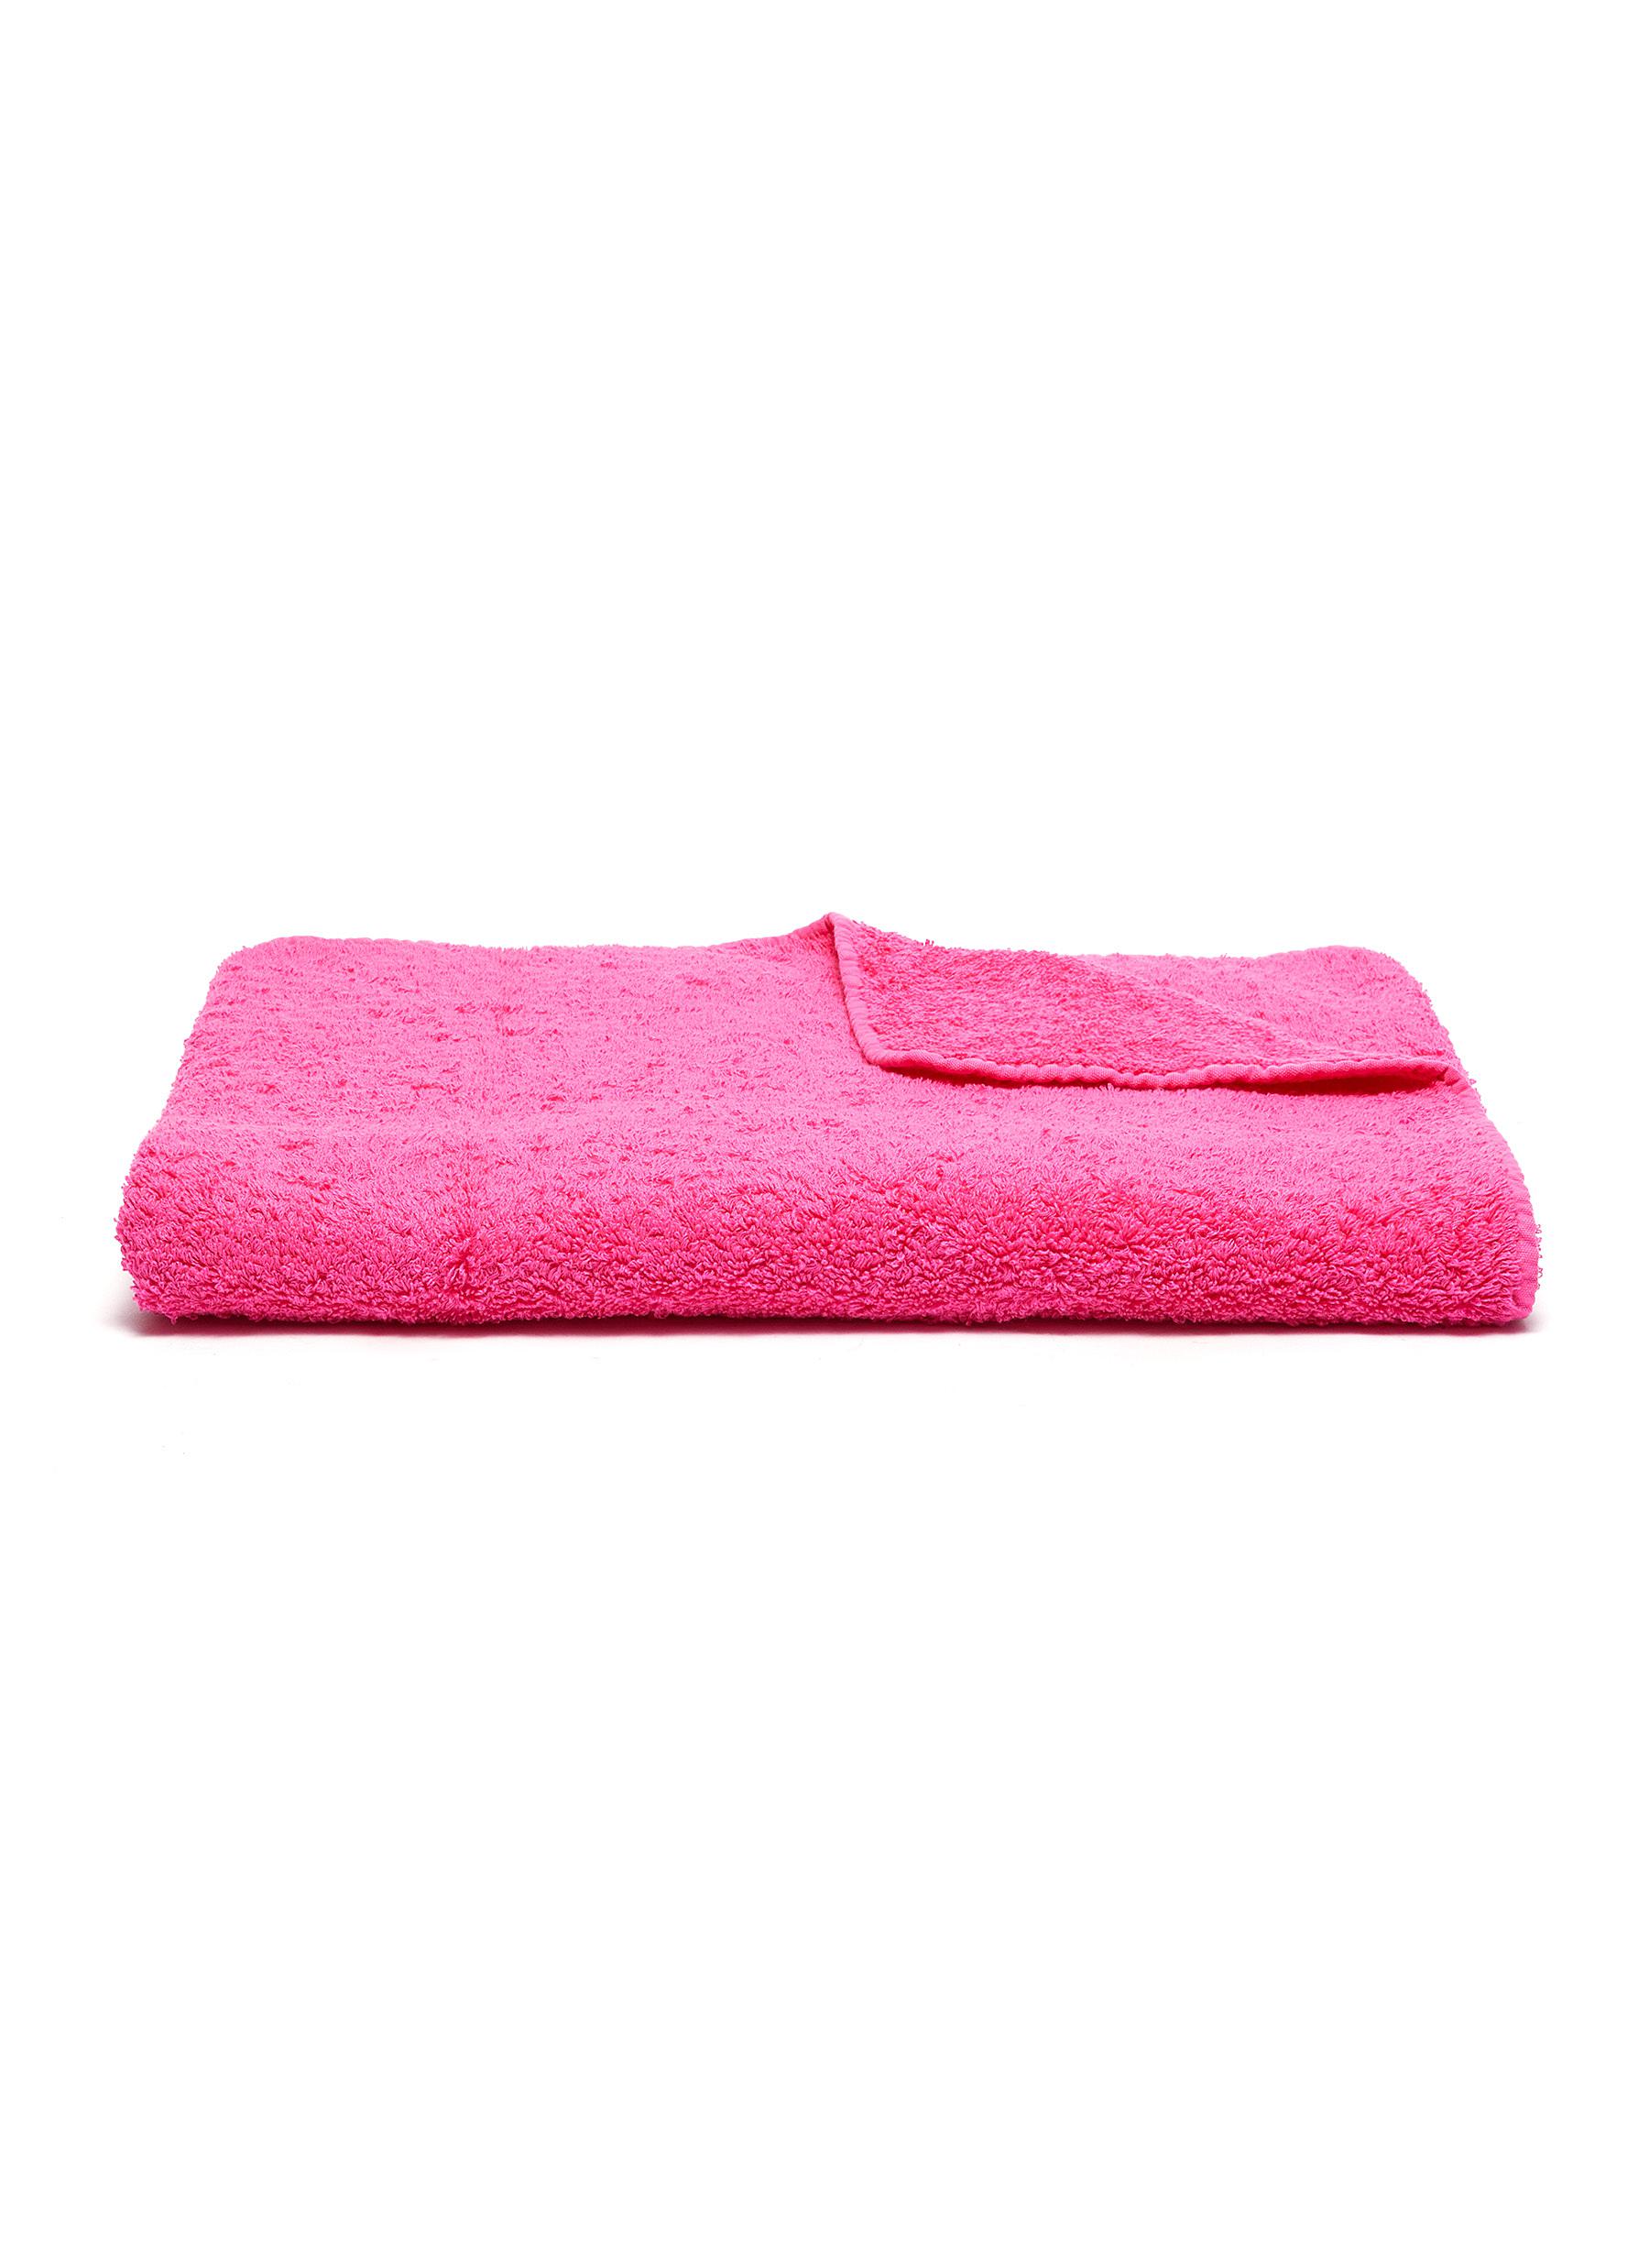 Abyss Super Pile Cotton Bath Towel - Happy Pink